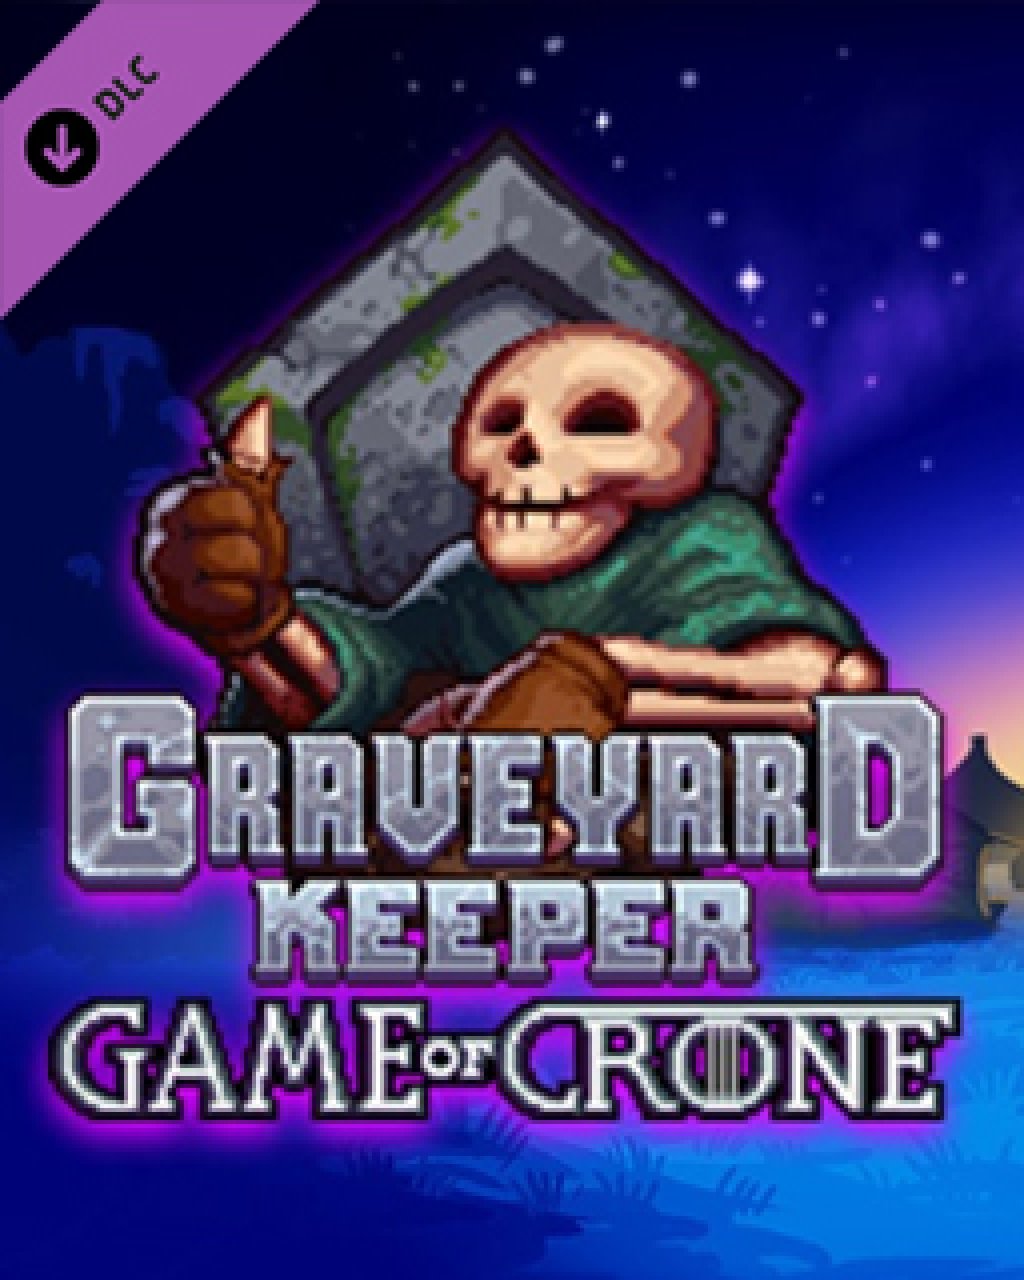 ESD Graveyard Keeper Game Of Crone